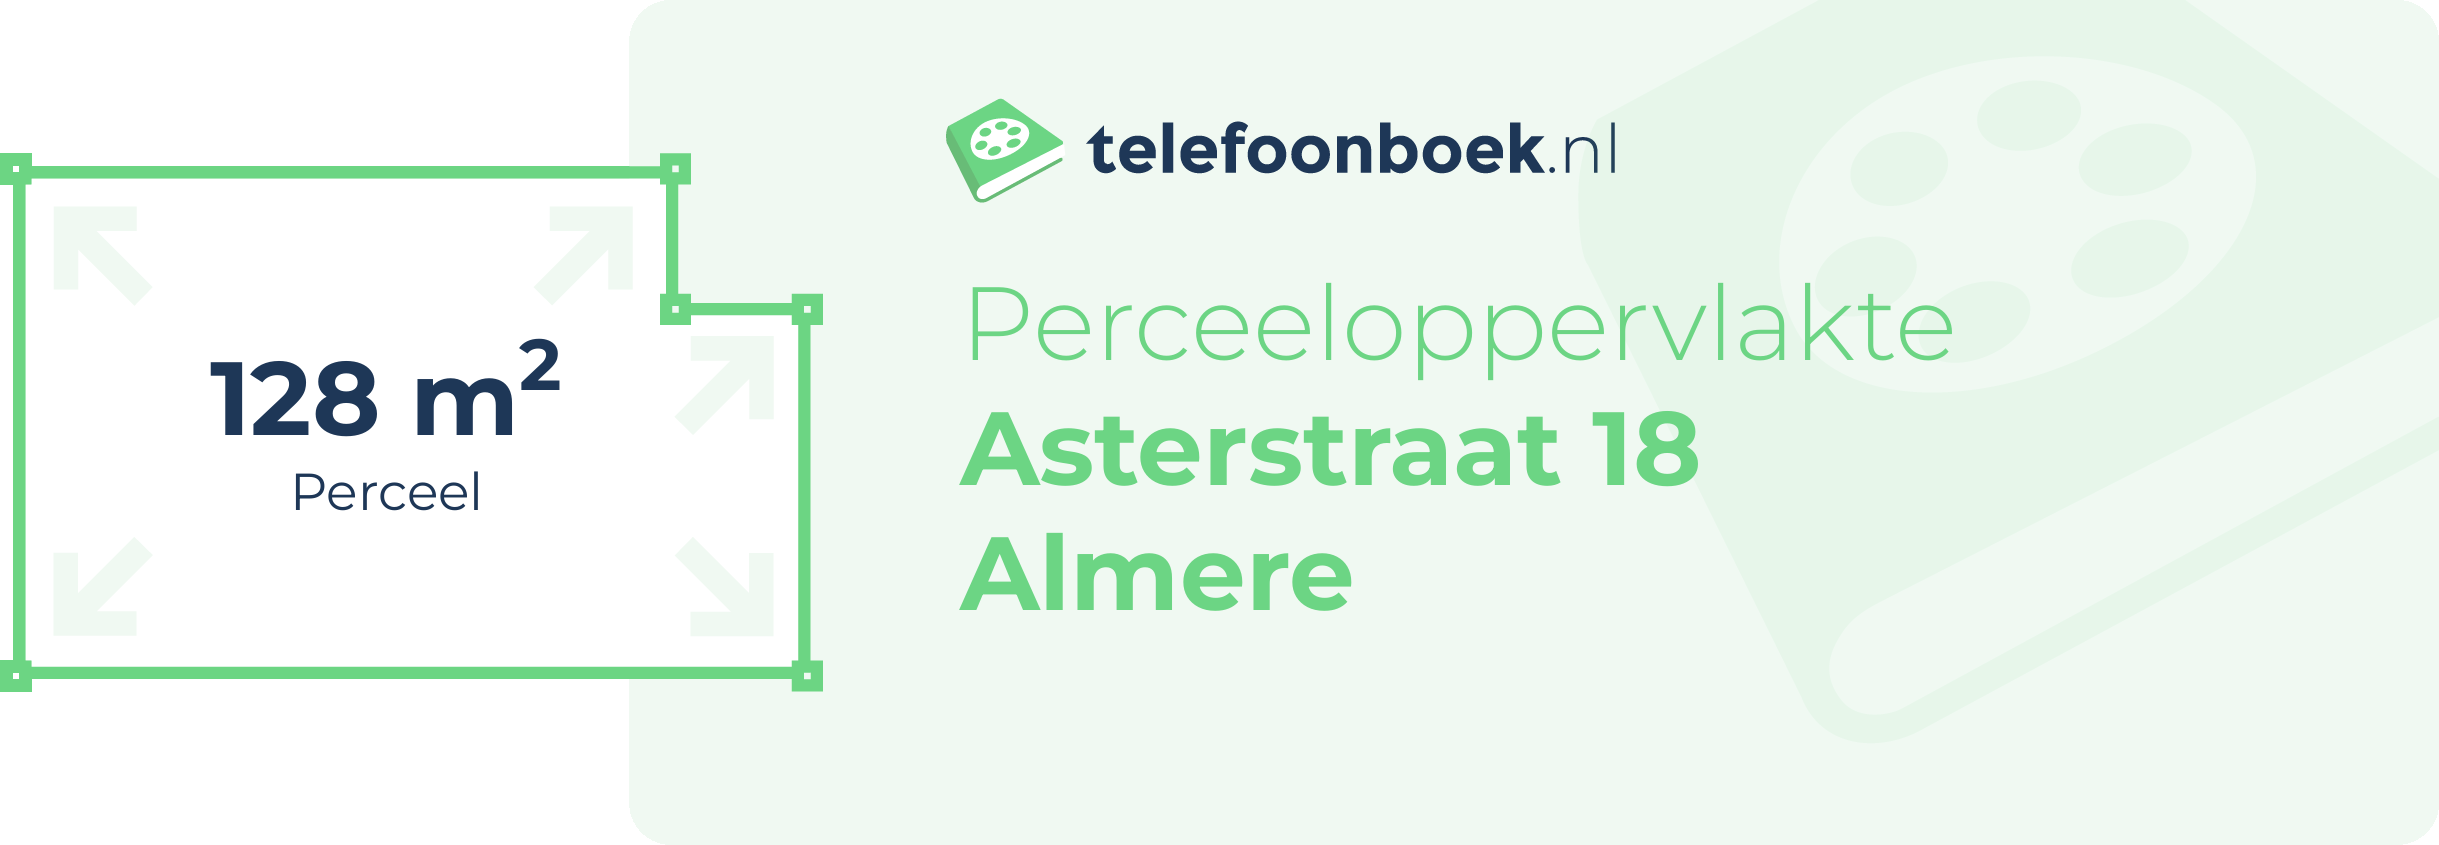 Perceeloppervlakte Asterstraat 18 Almere